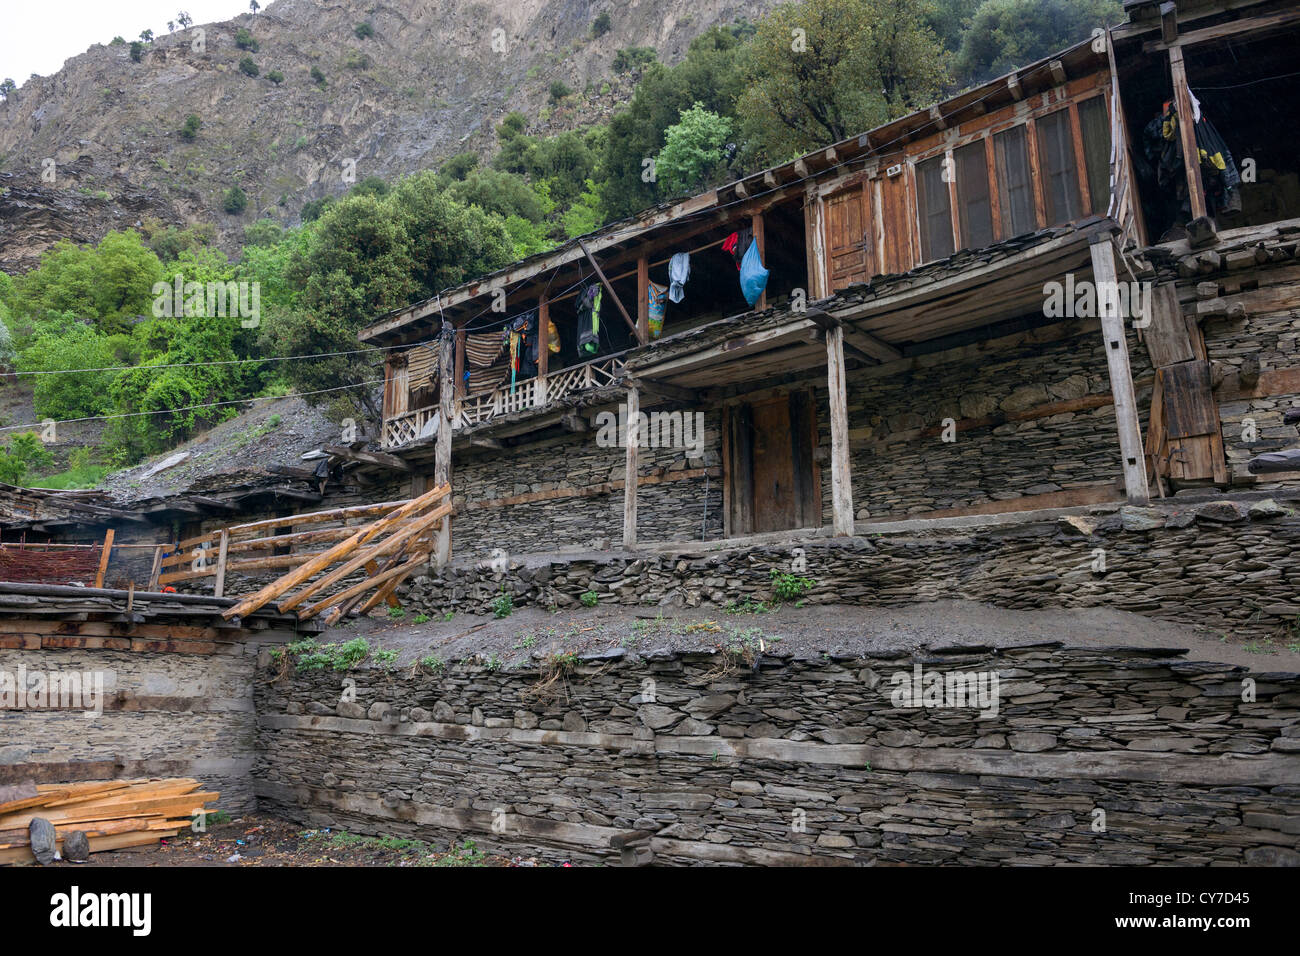 Kalash village de Balanguru, vallée de Rumbur, Chitral, Khyber-Pakhtunkhwa, Pakistan Banque D'Images